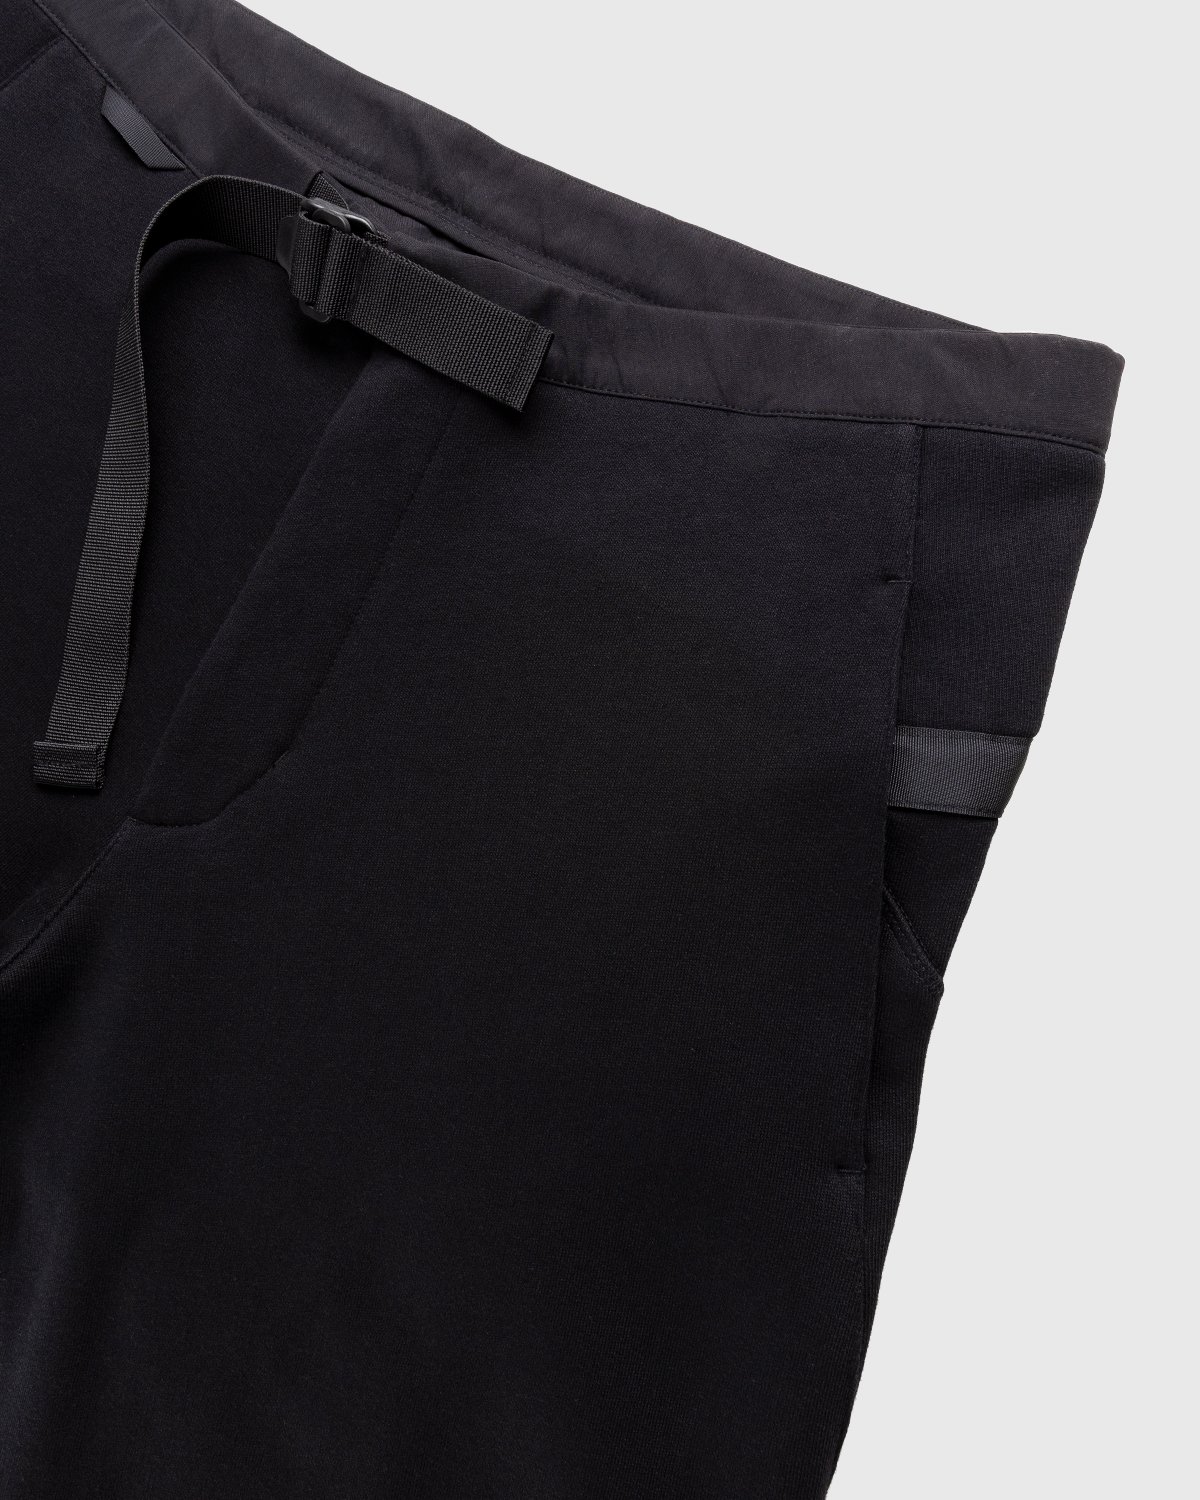 ACRONYM - P39-PR Pants Black - Clothing - Black - Image 3